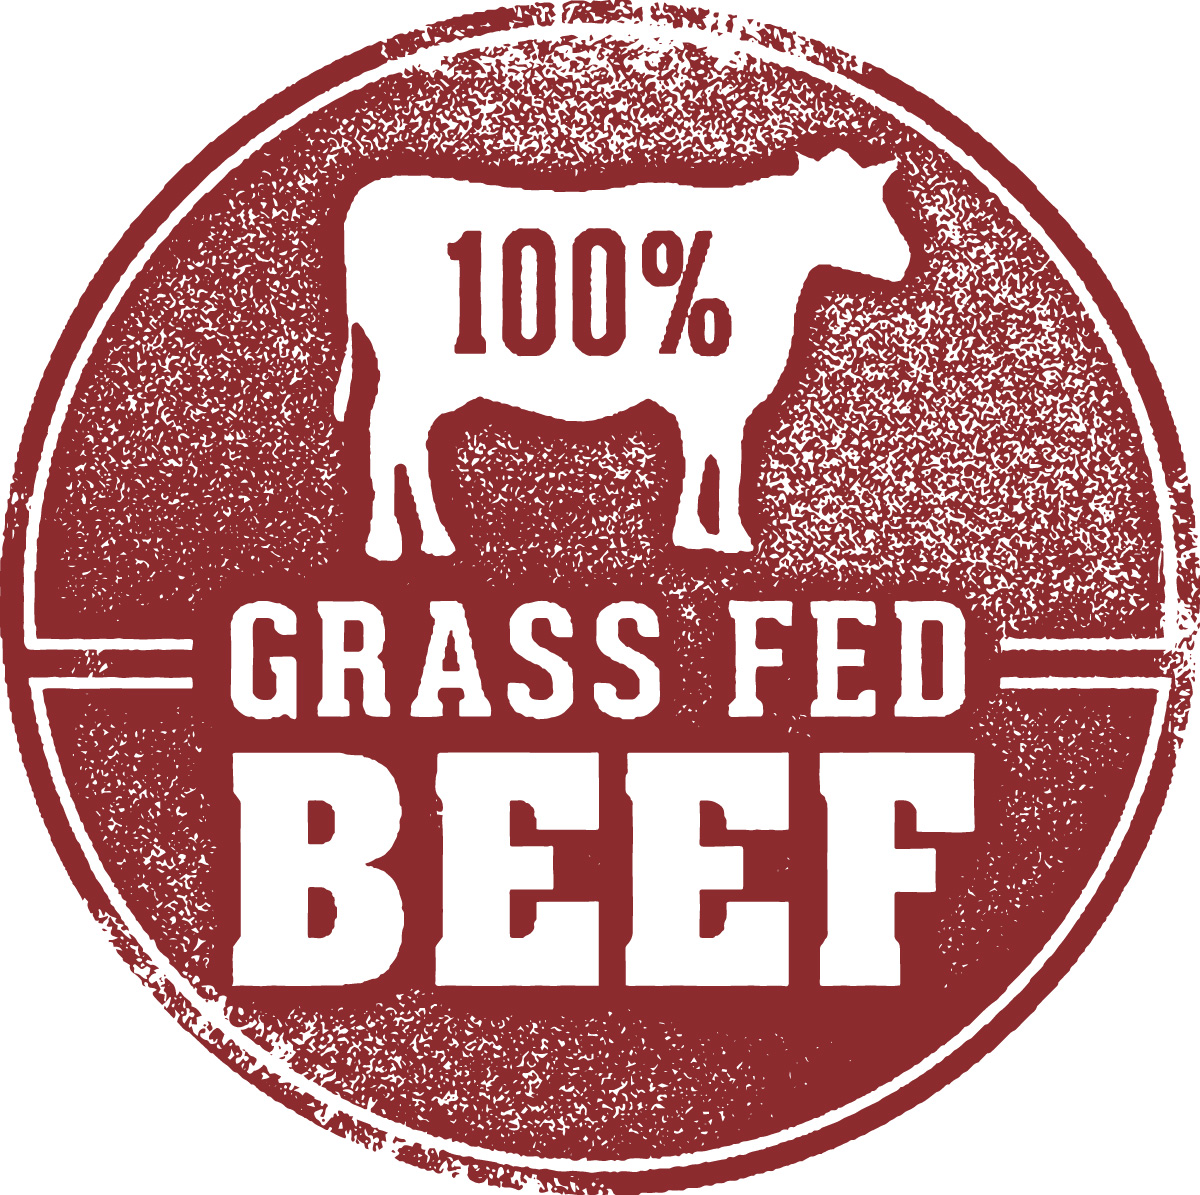 100% grass-fed beef